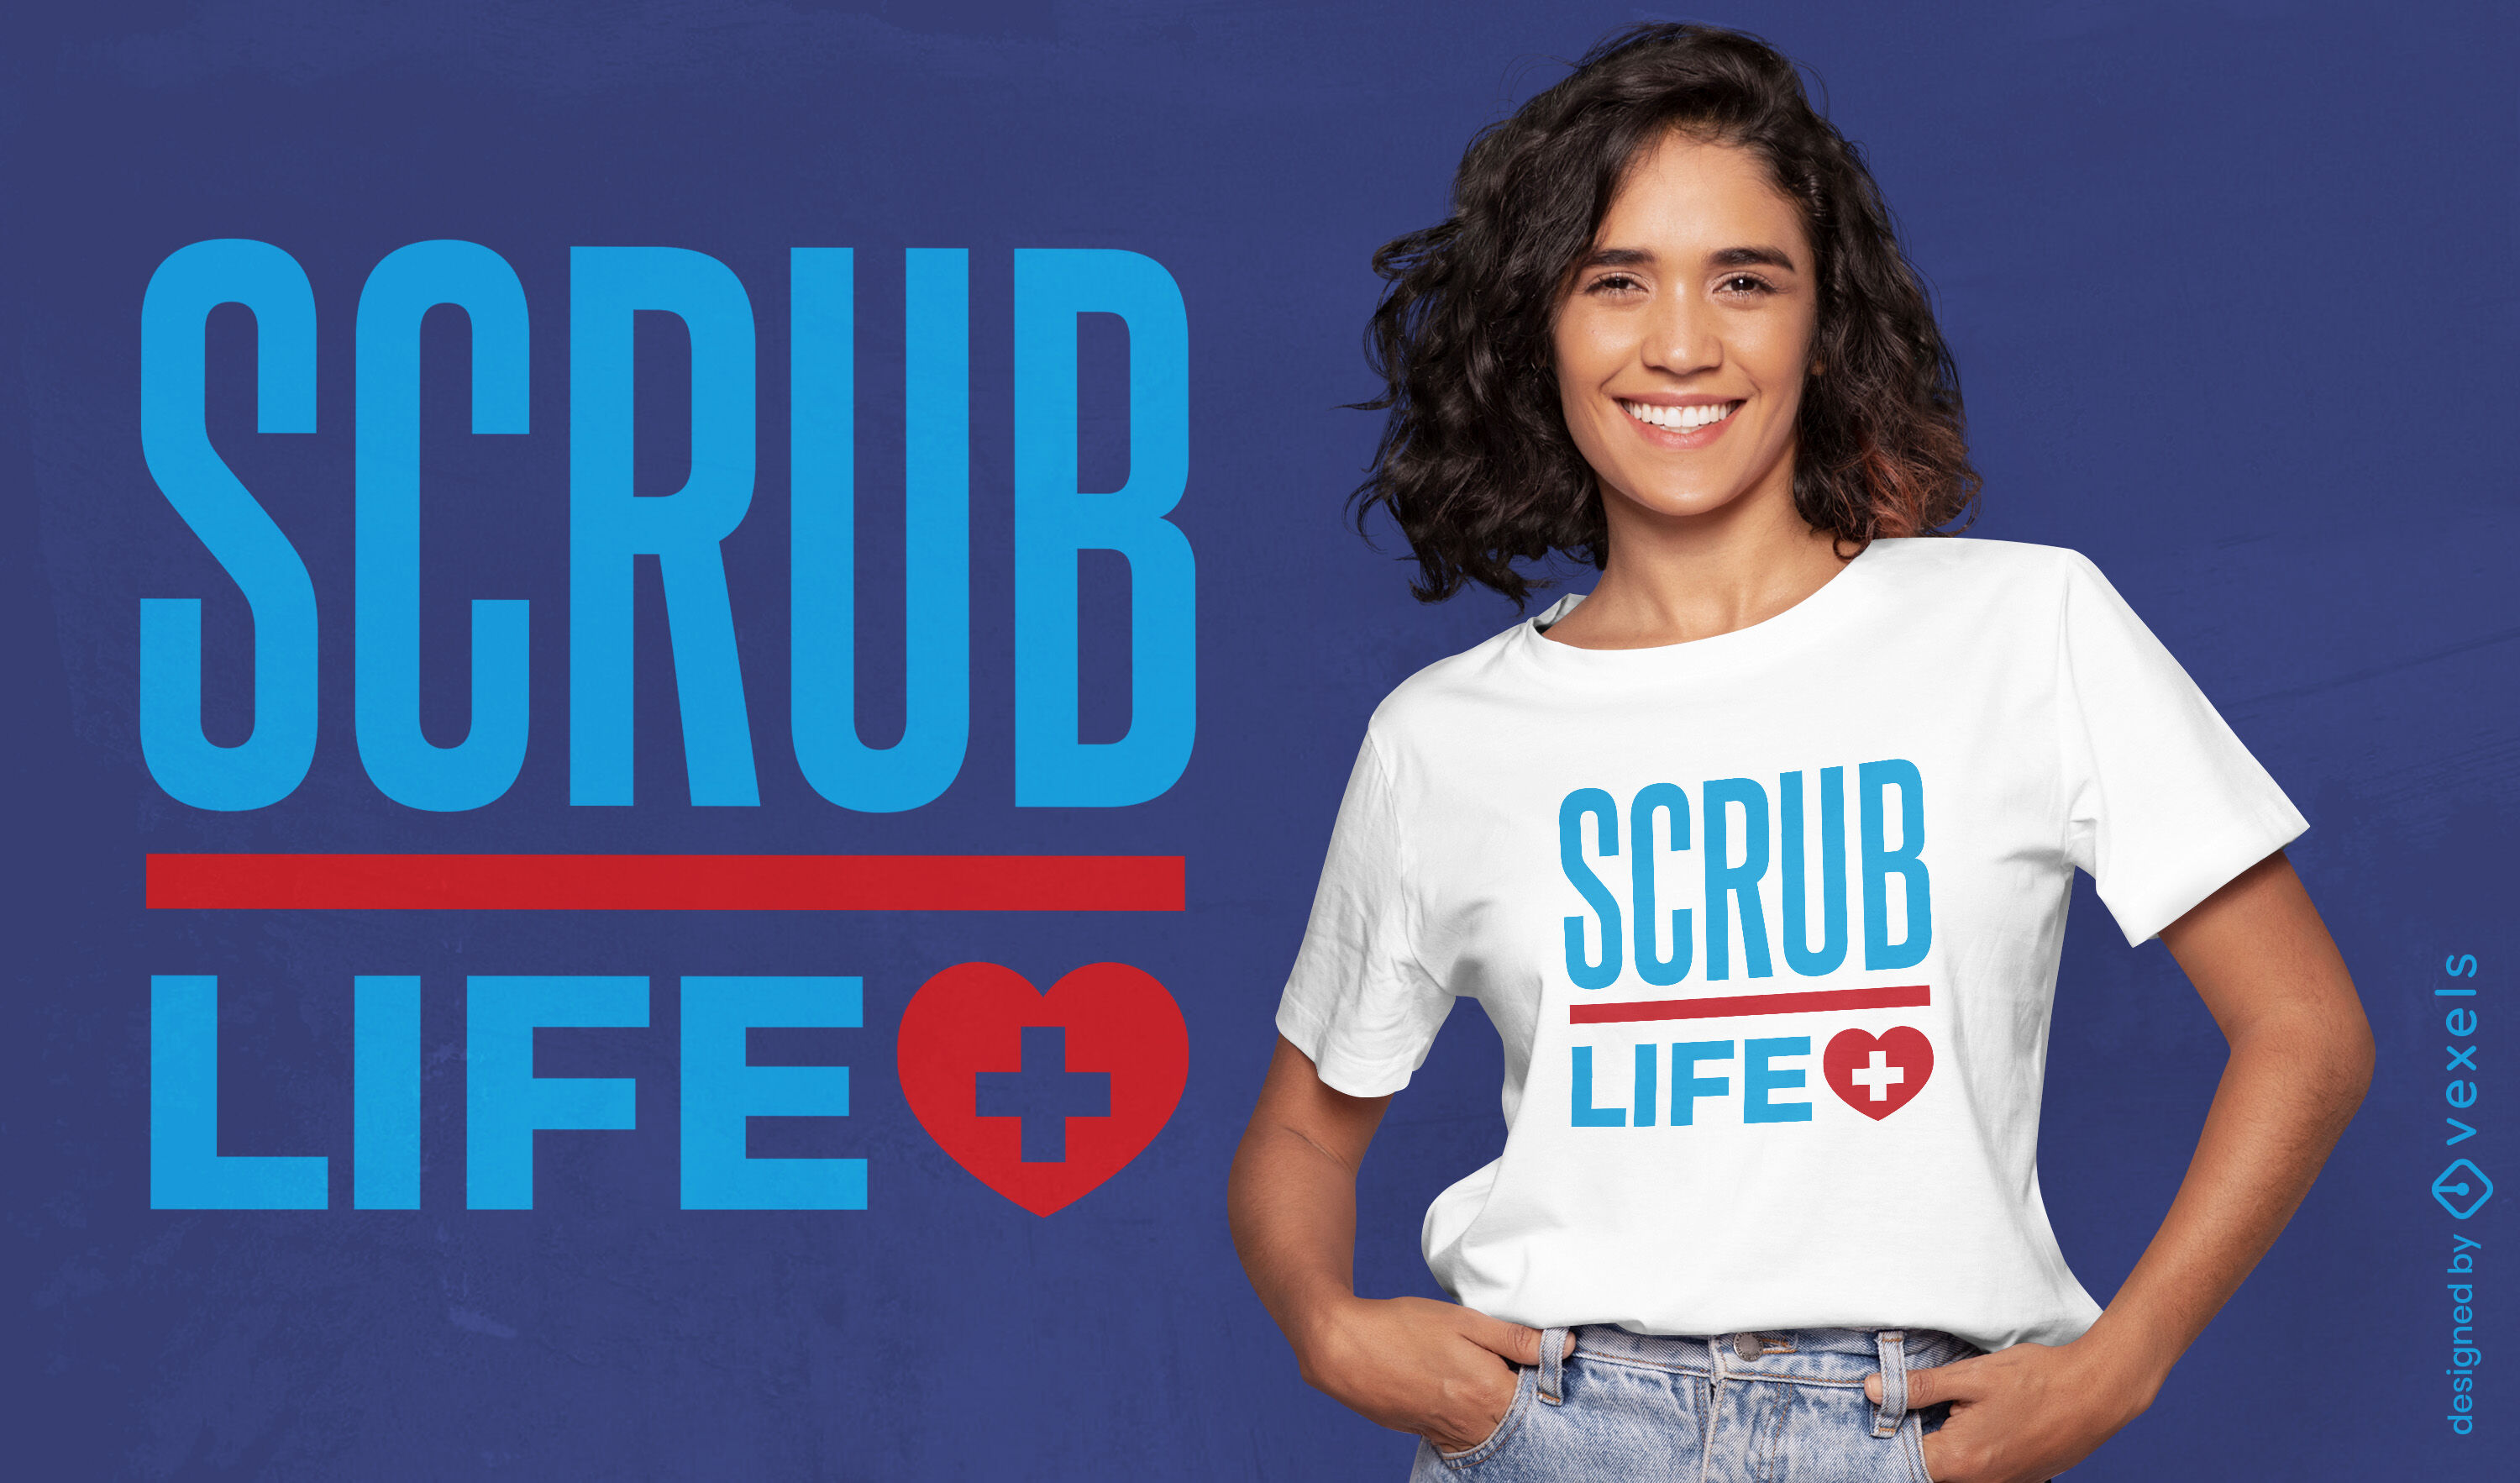 Scrub life t-shirt design